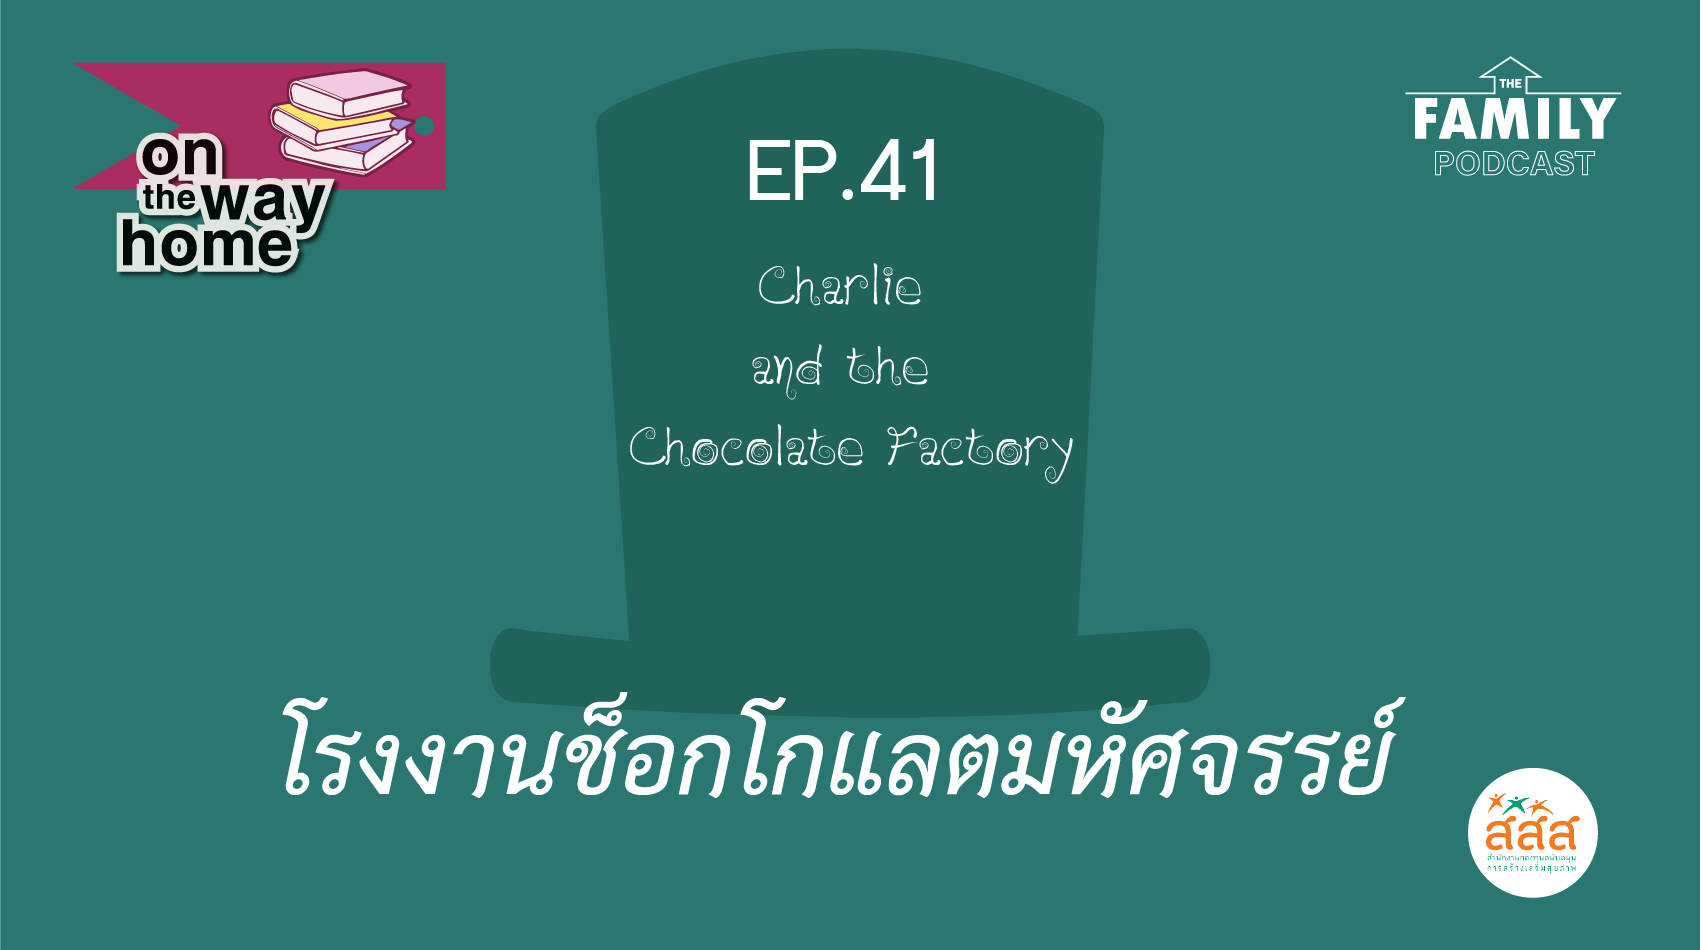 The Family Podcast On the Way Home EP.41 โรงงานช็อกโกแลตมหัศจรรย์ (Charlie and the Chocolate Factory)